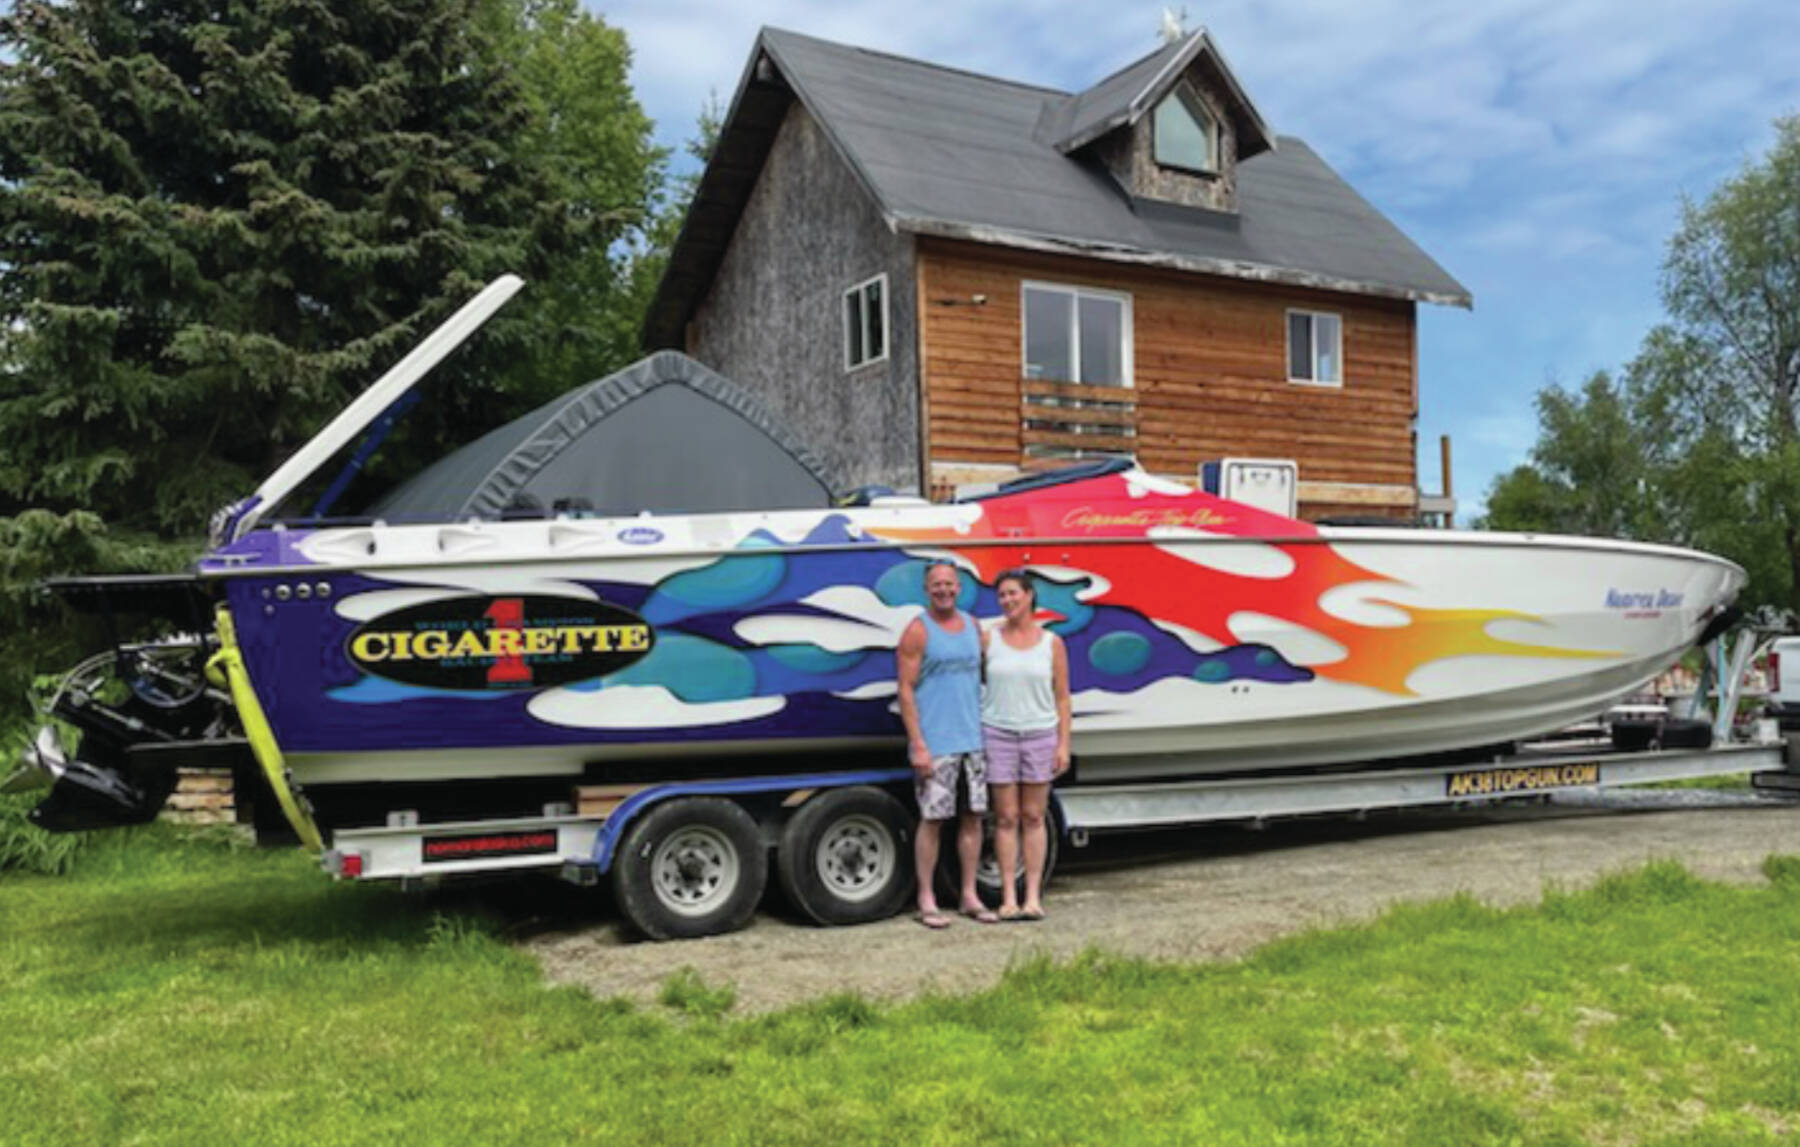 Emilie Springer/Homer News
Sandy and Kira Stuart with their boat at home.